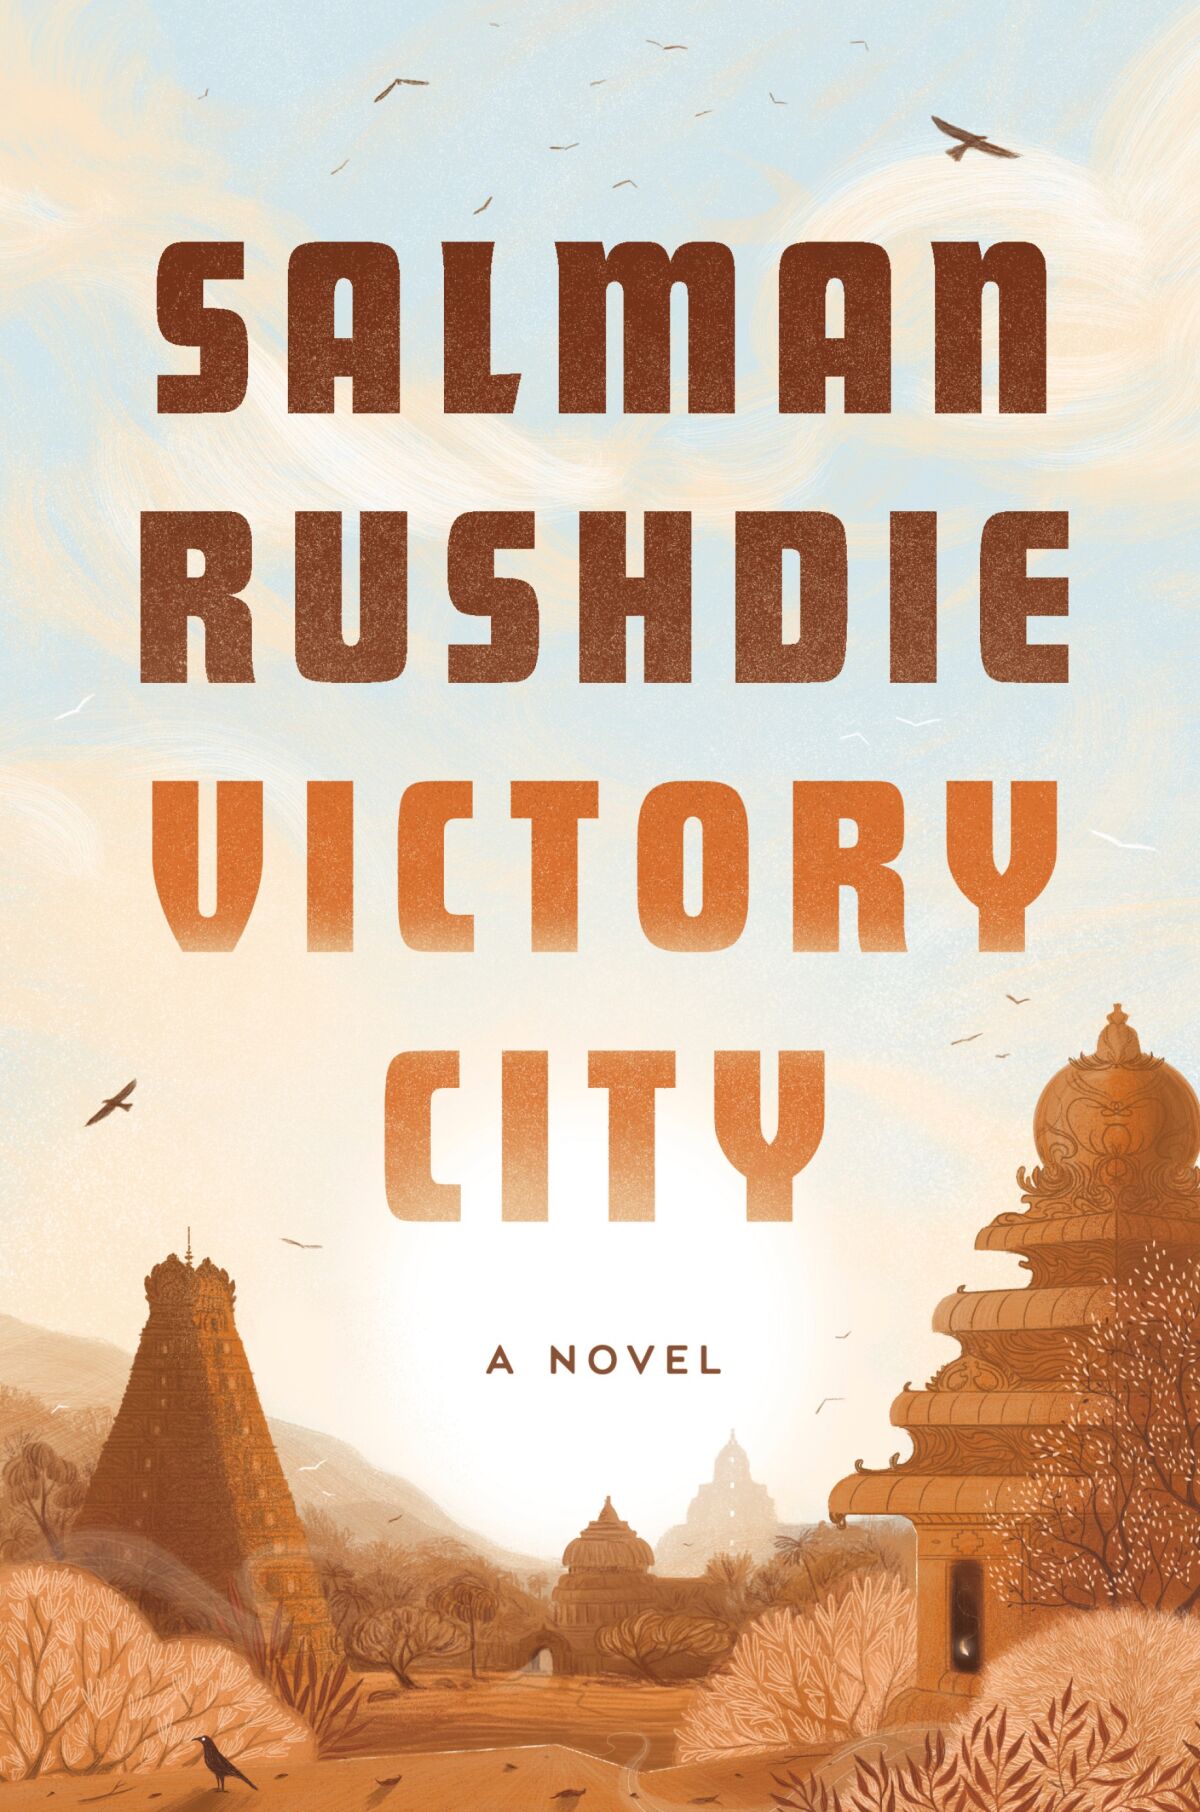 'Victory City,' by Salman Rushdie